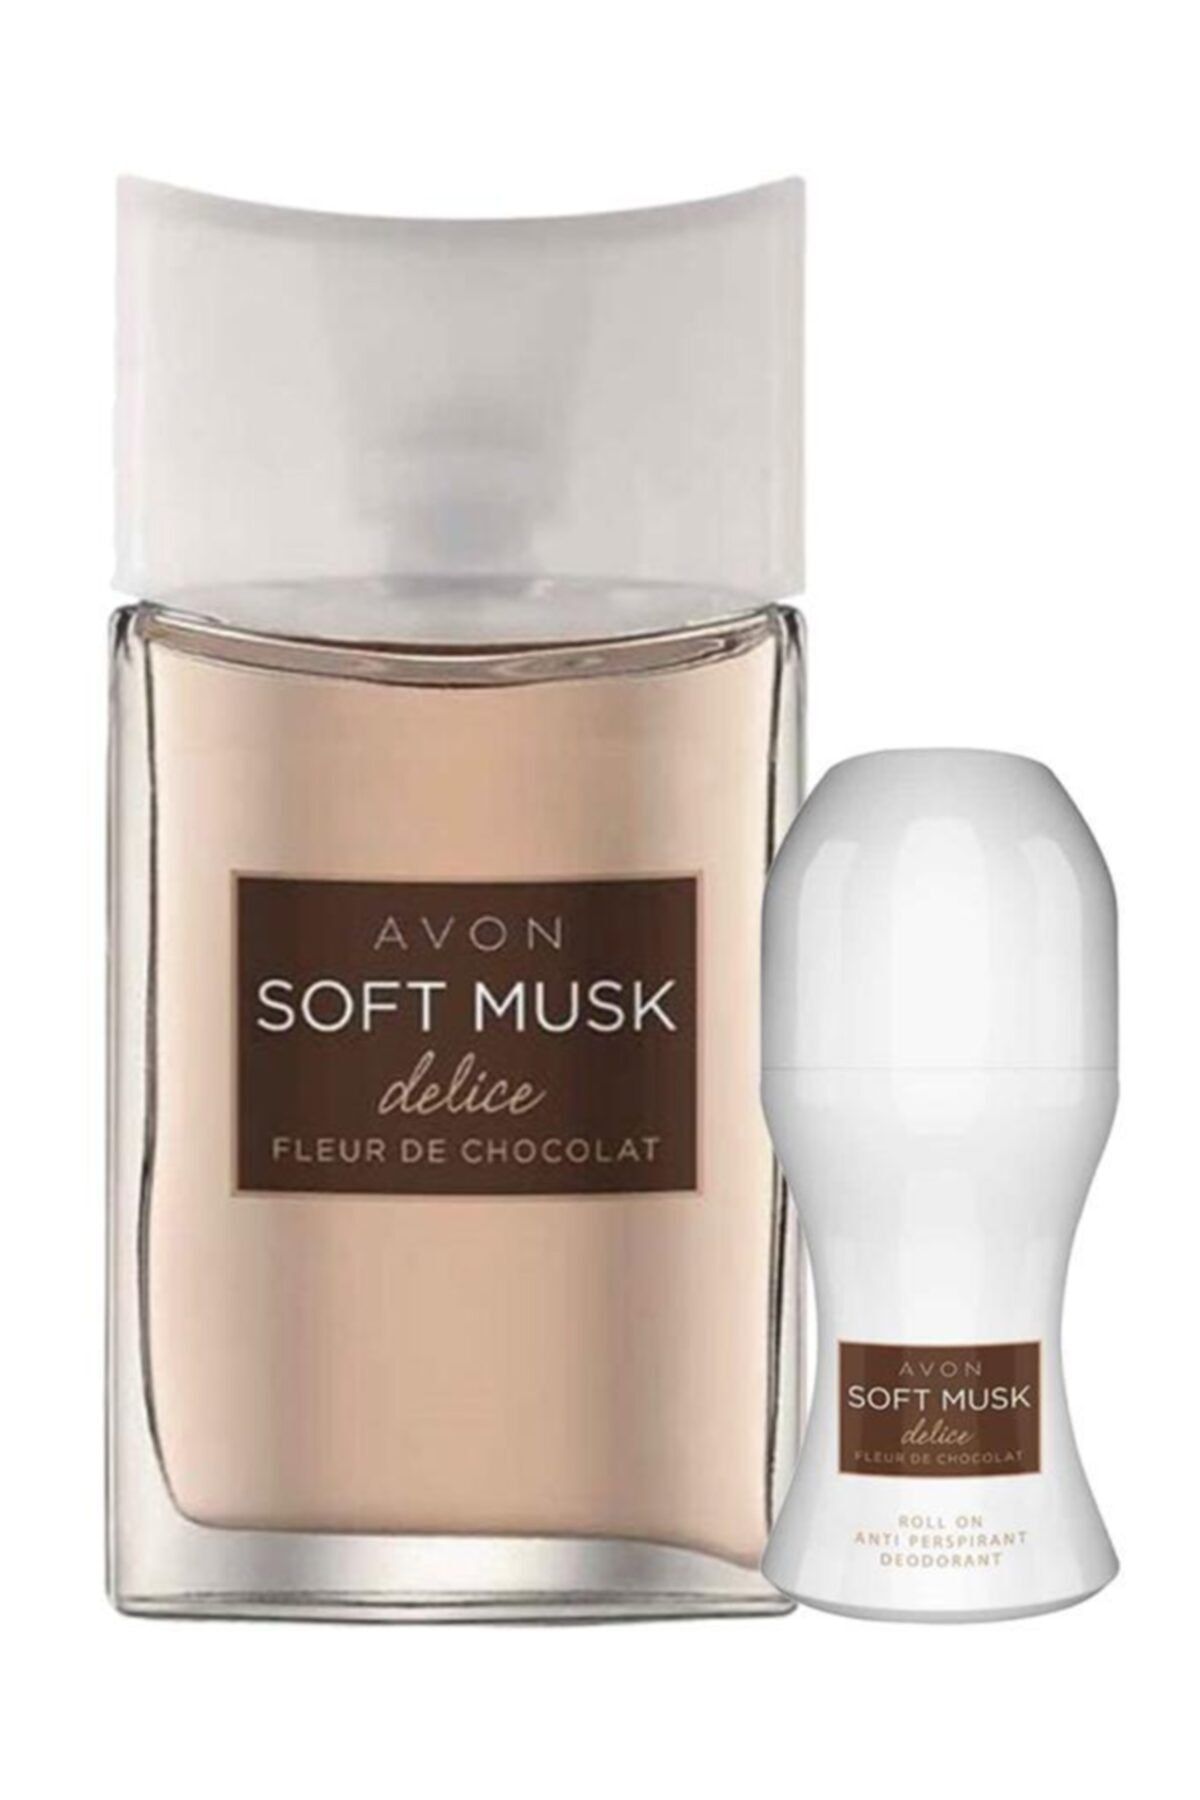 Флер делис. Avon Soft Musk Delice fleur de chocolat. Soft Musk Delice Avon. Soft Musk Delice fleur de. Soft Musk Delice fleur de Chocolate.